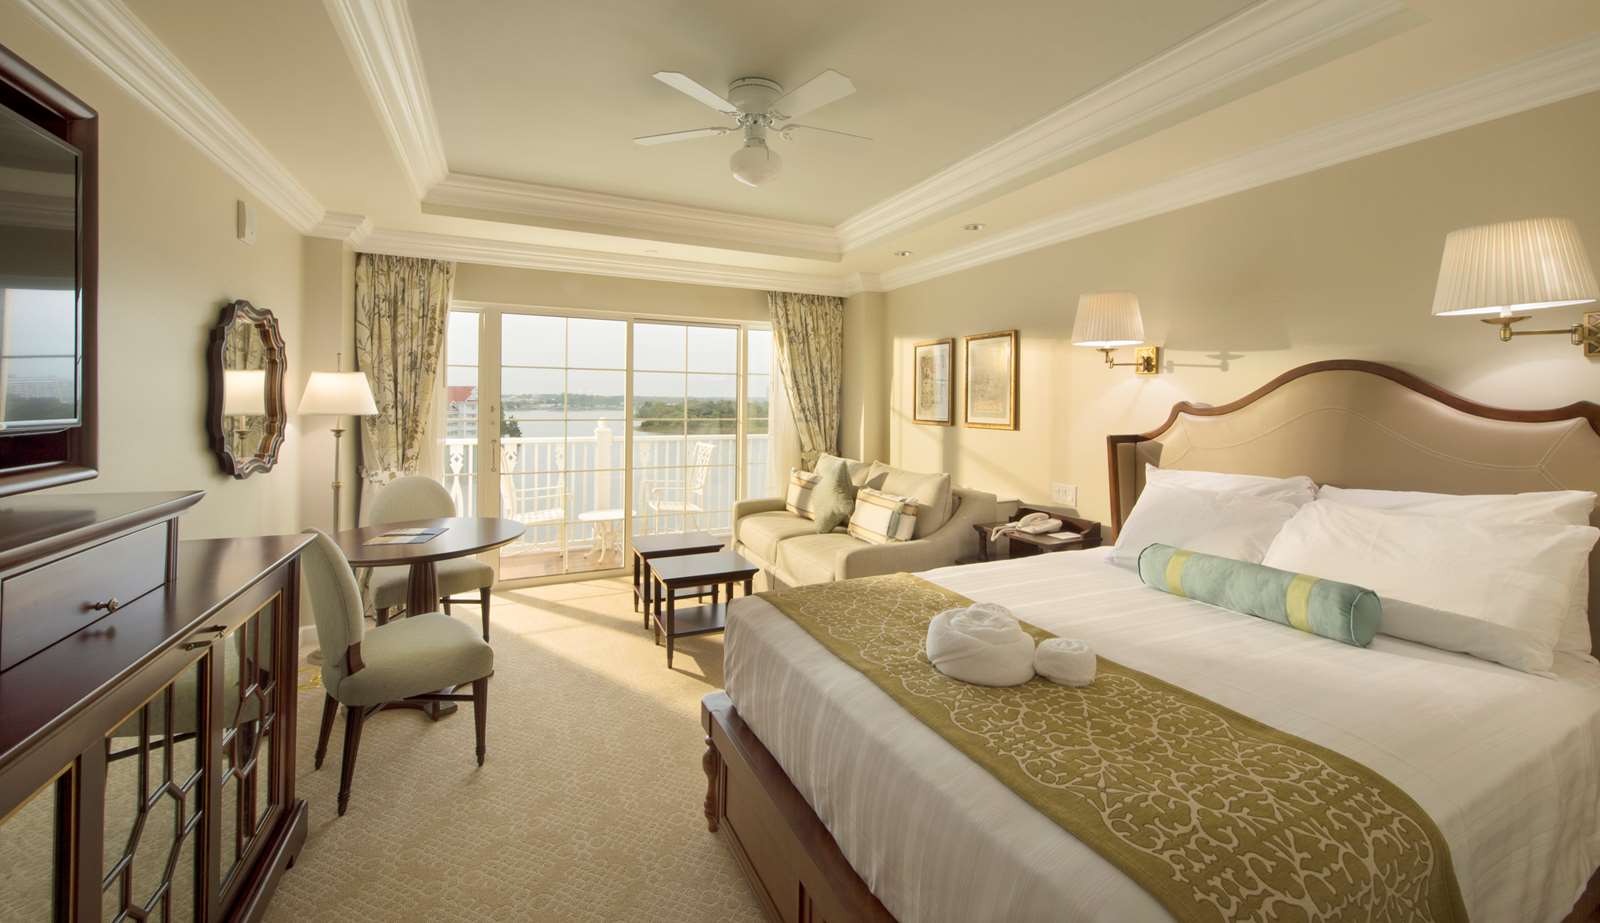 100 Disney Old Key West 2 Bedroom Villa Floor Plan